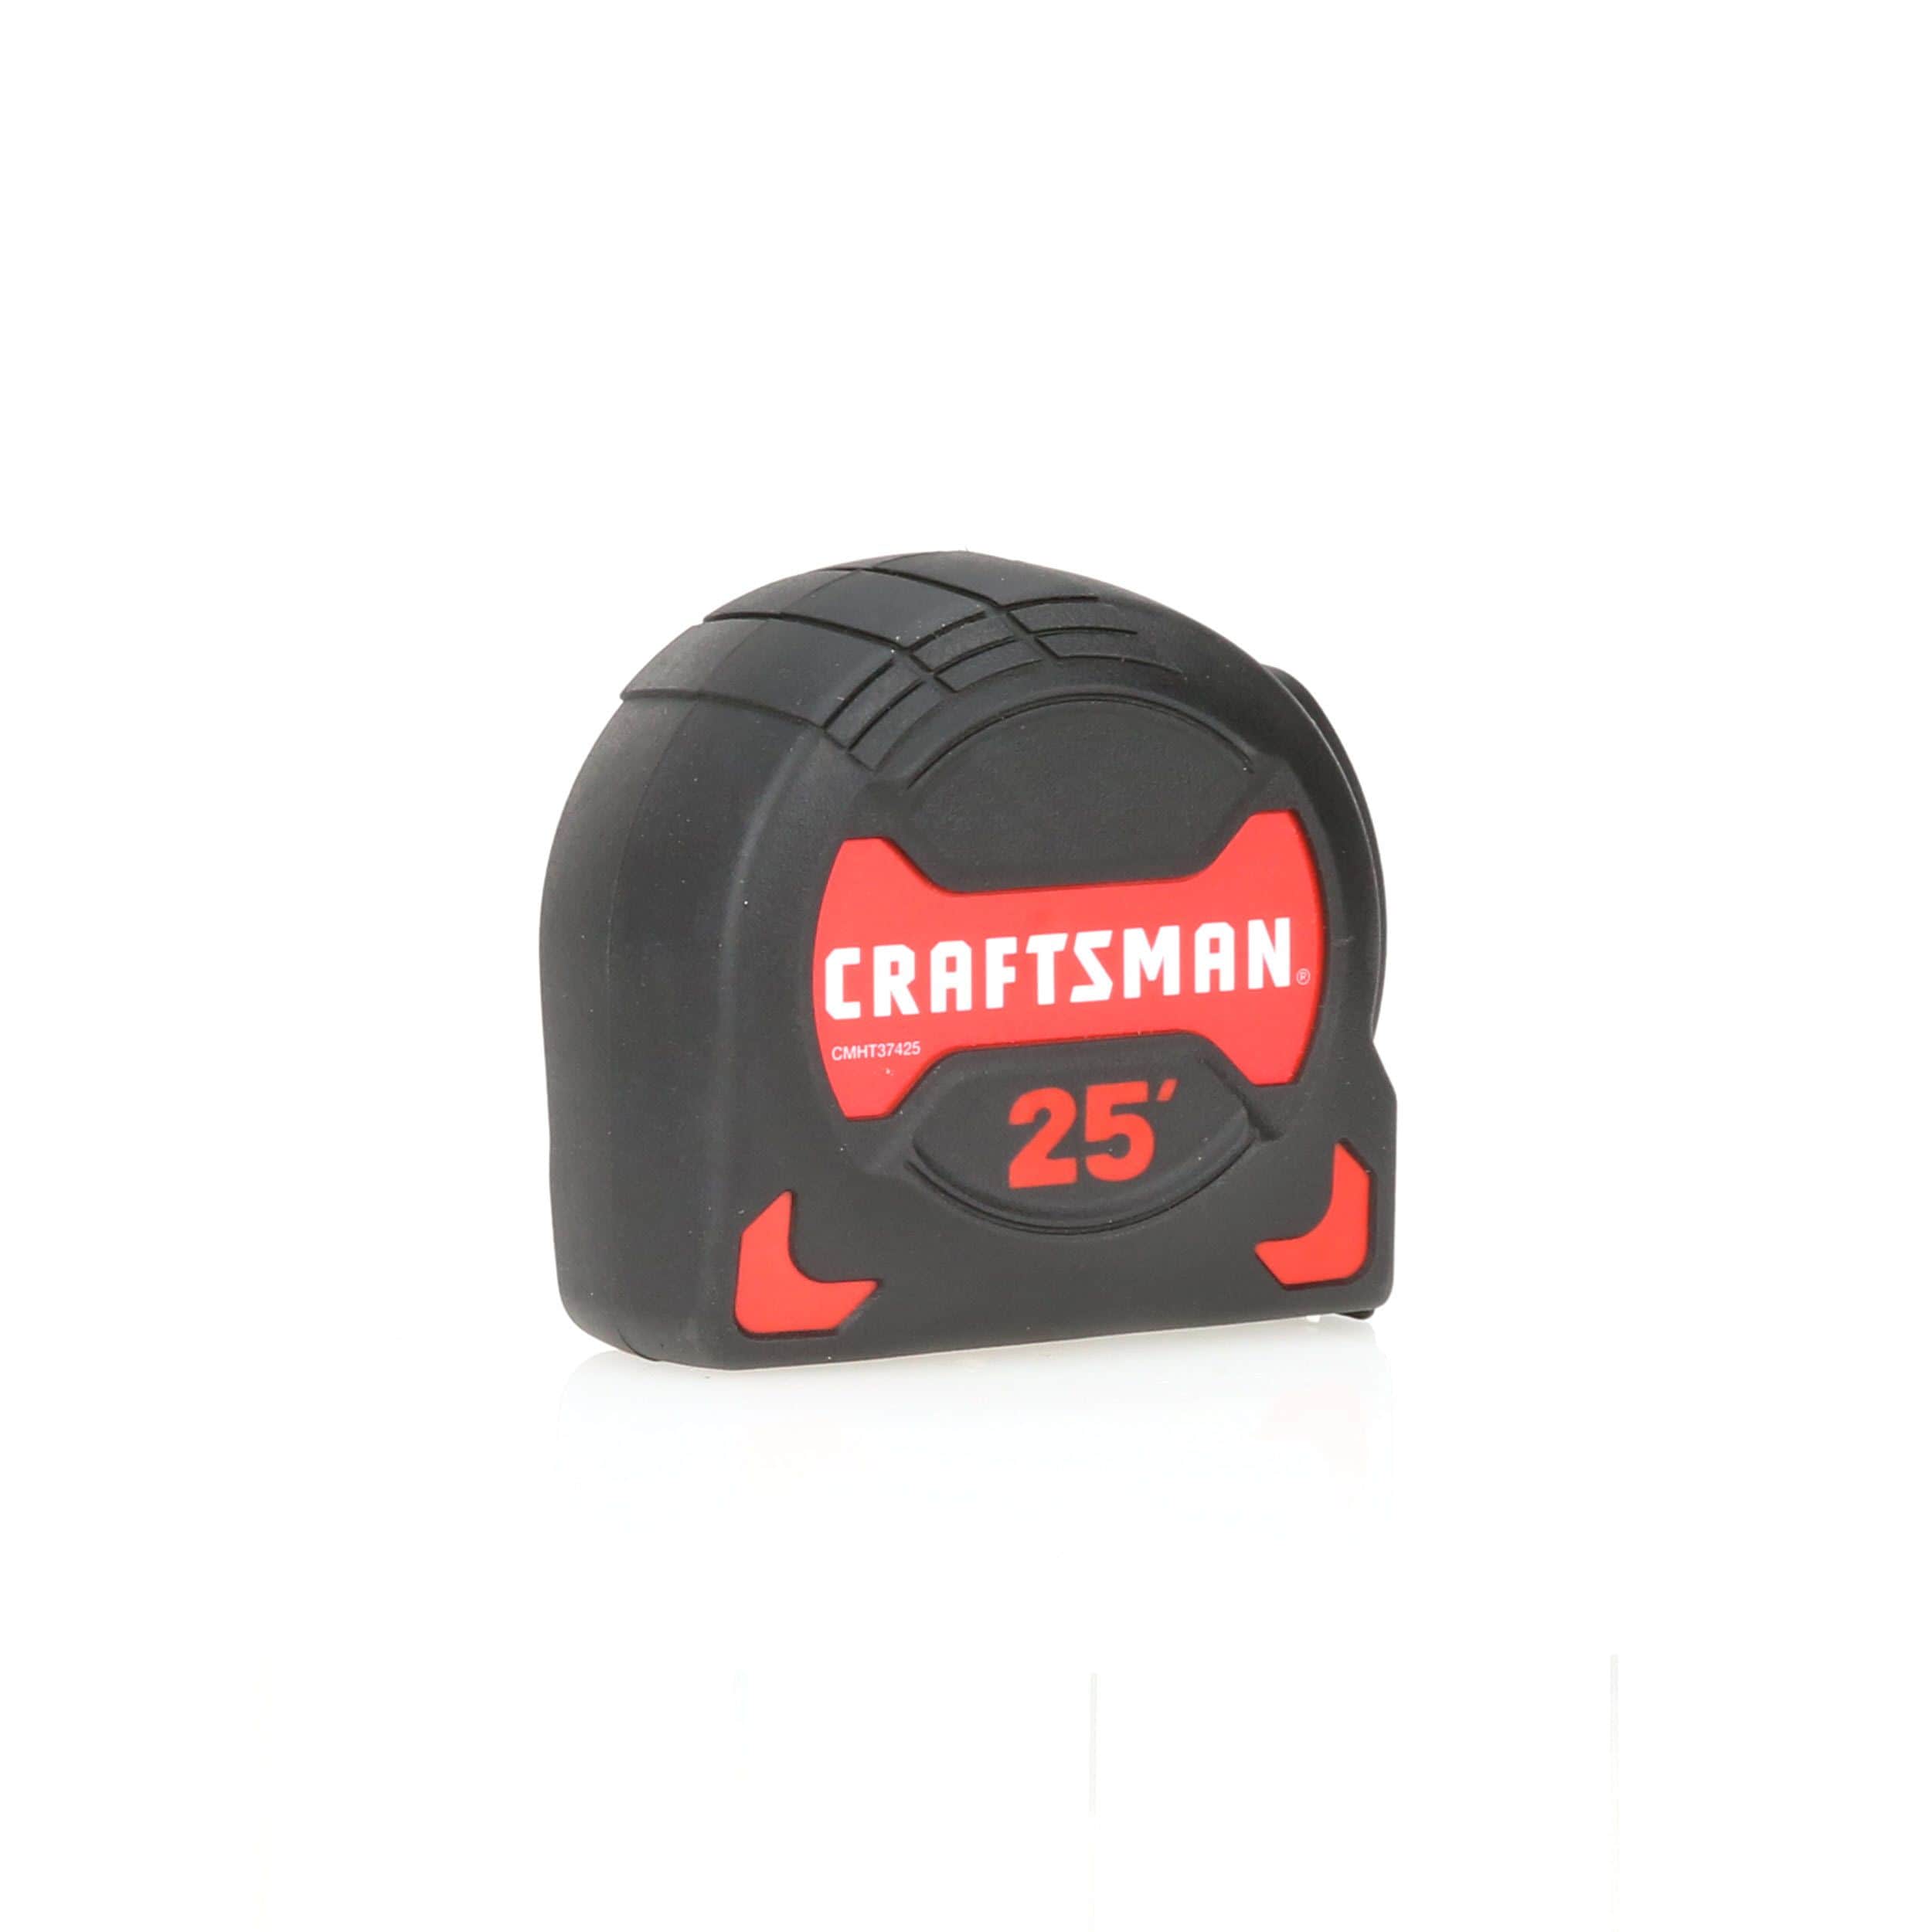 New Craftsman Sidewinder Tape Measure 16' or 25' - you choose!  :- 